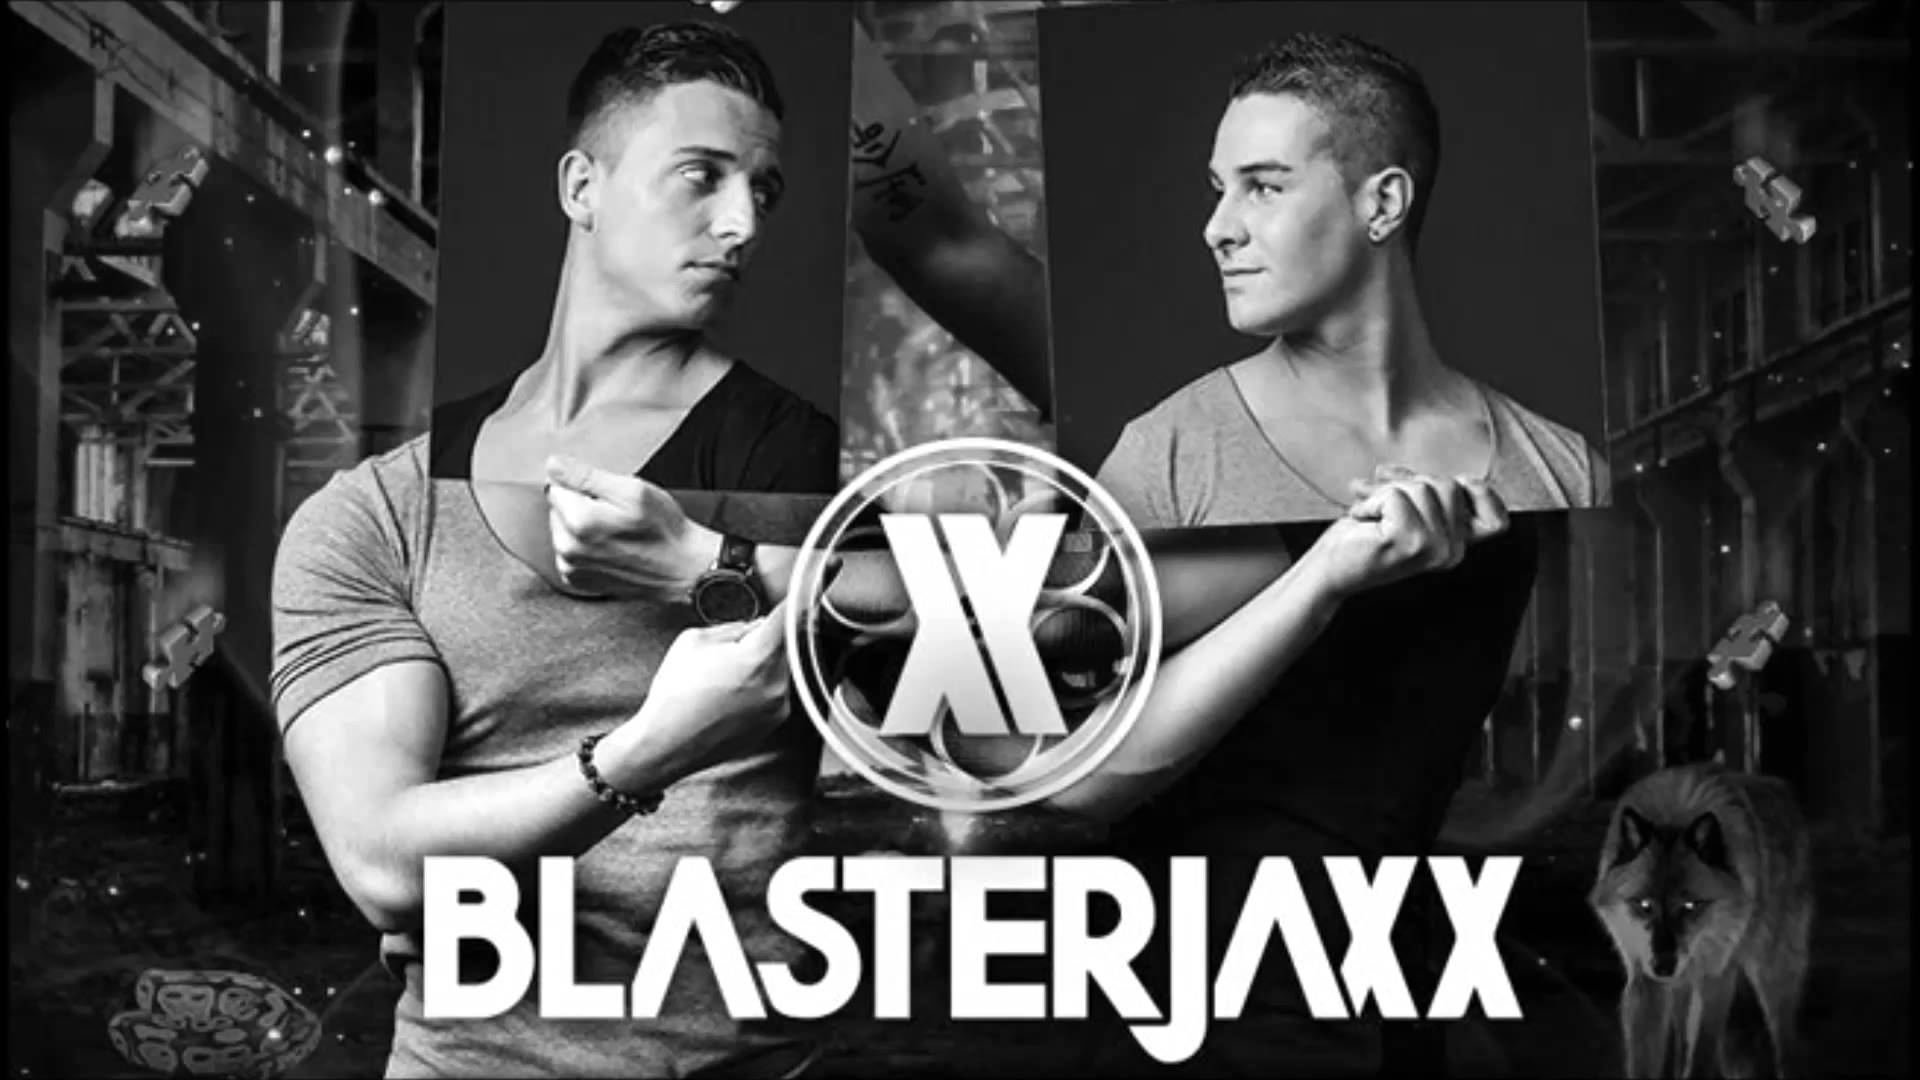 Blasterjaxx Logo Wallpaper Pixshark Image